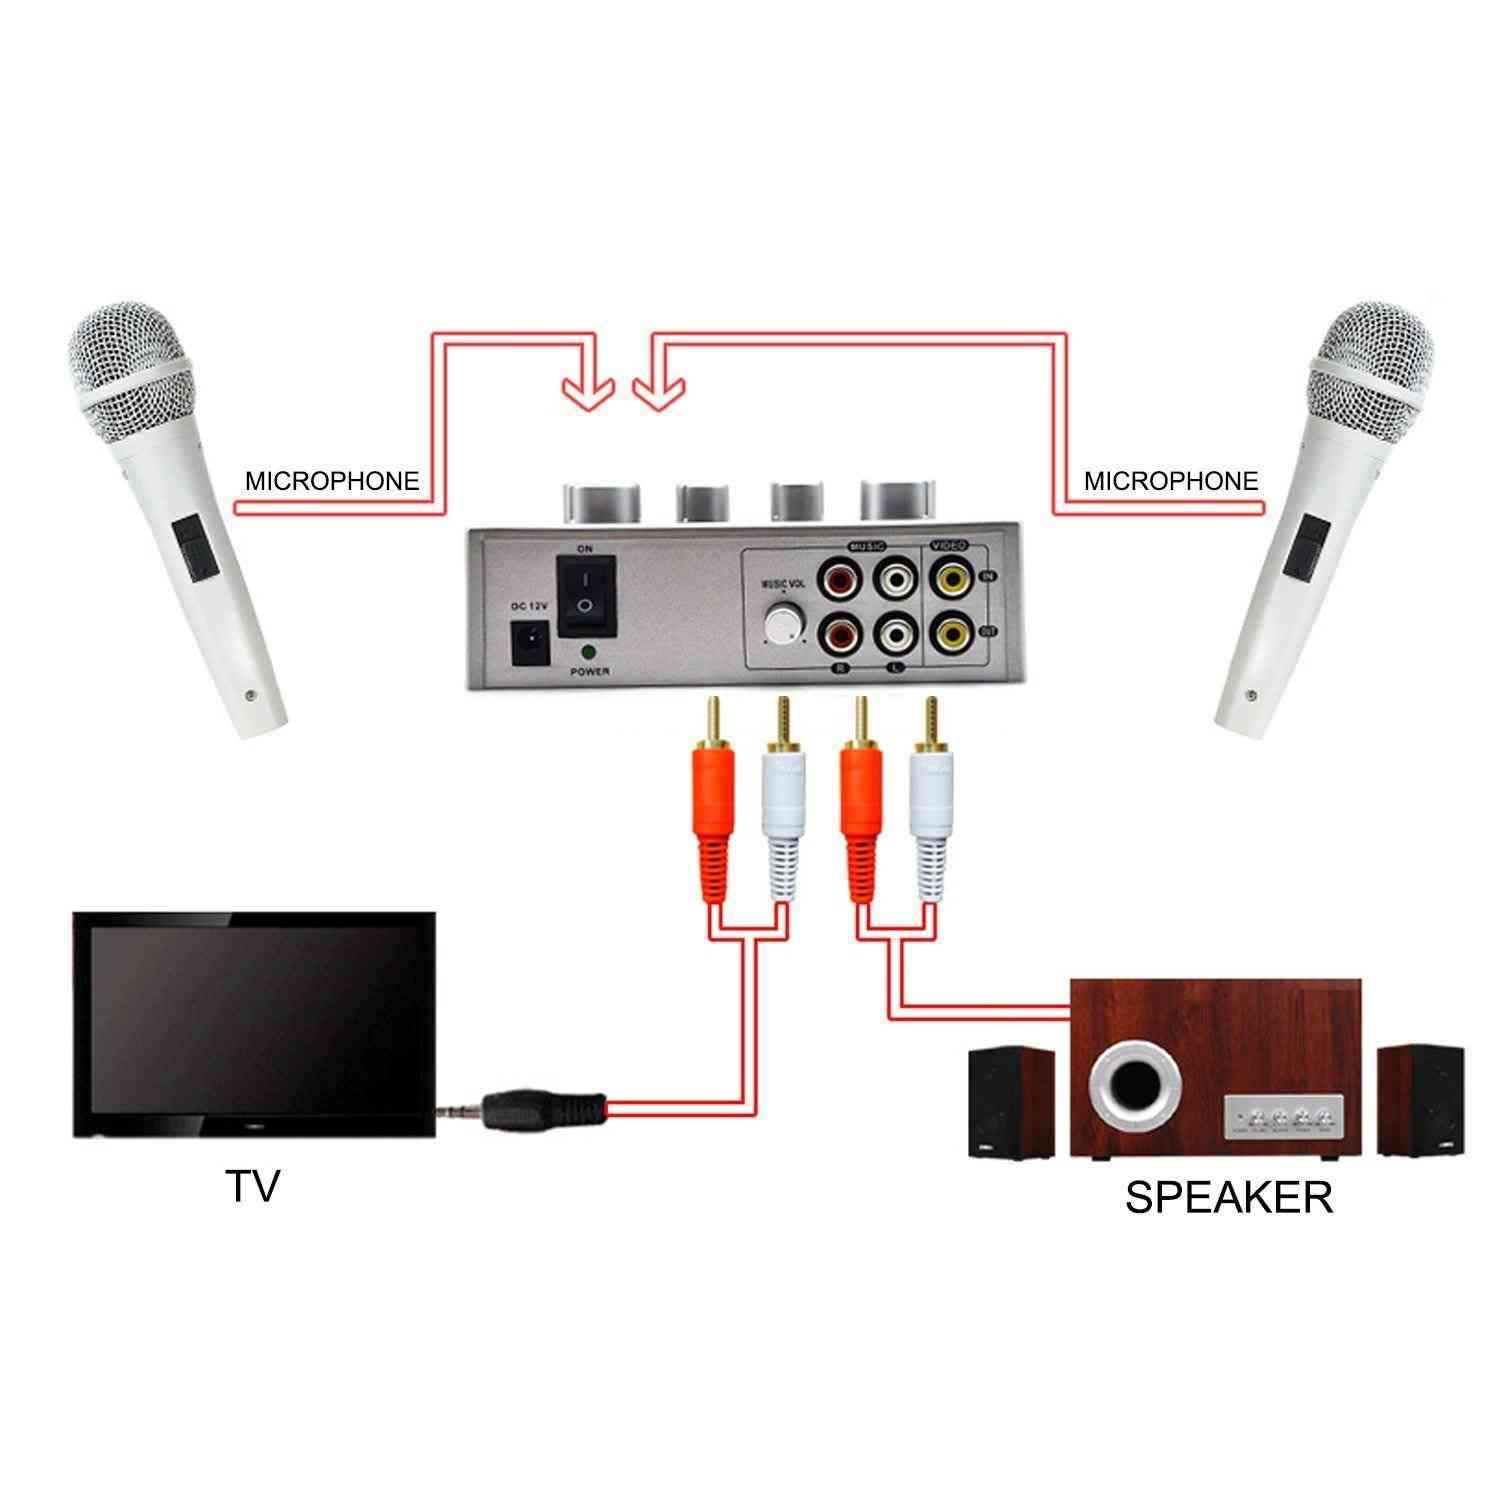 Как подключить караоке на телевизоре lg смарт тв: настройка микрофона, приложения